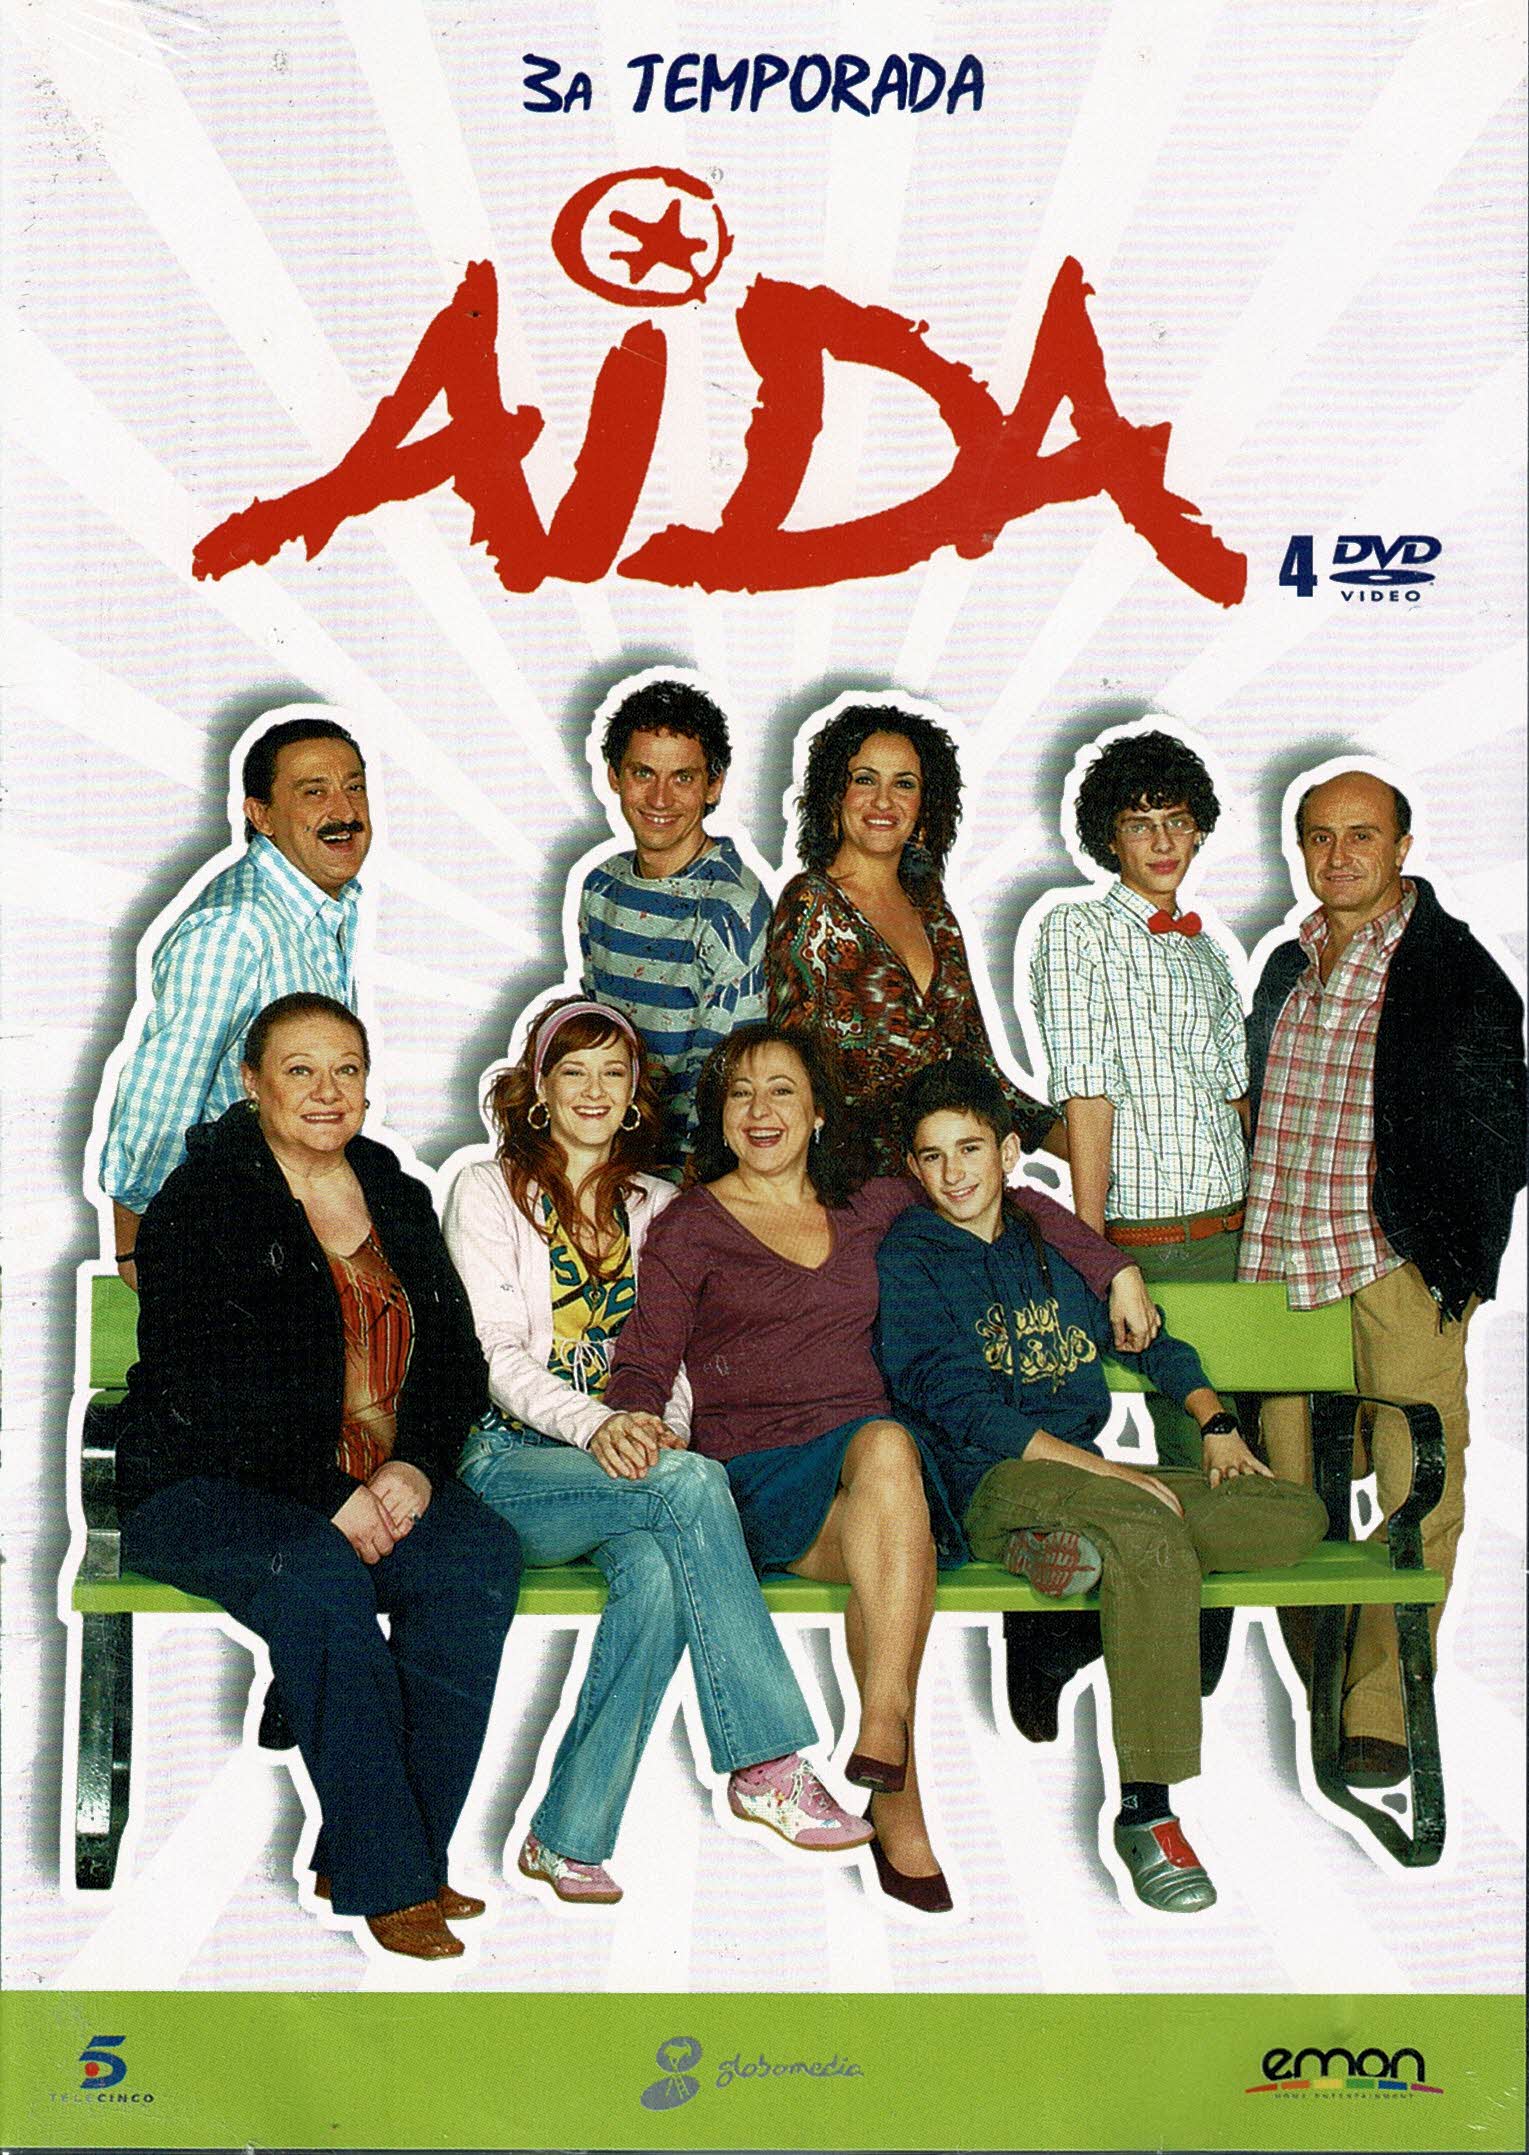 Aida 3ª temporada 4 dvd